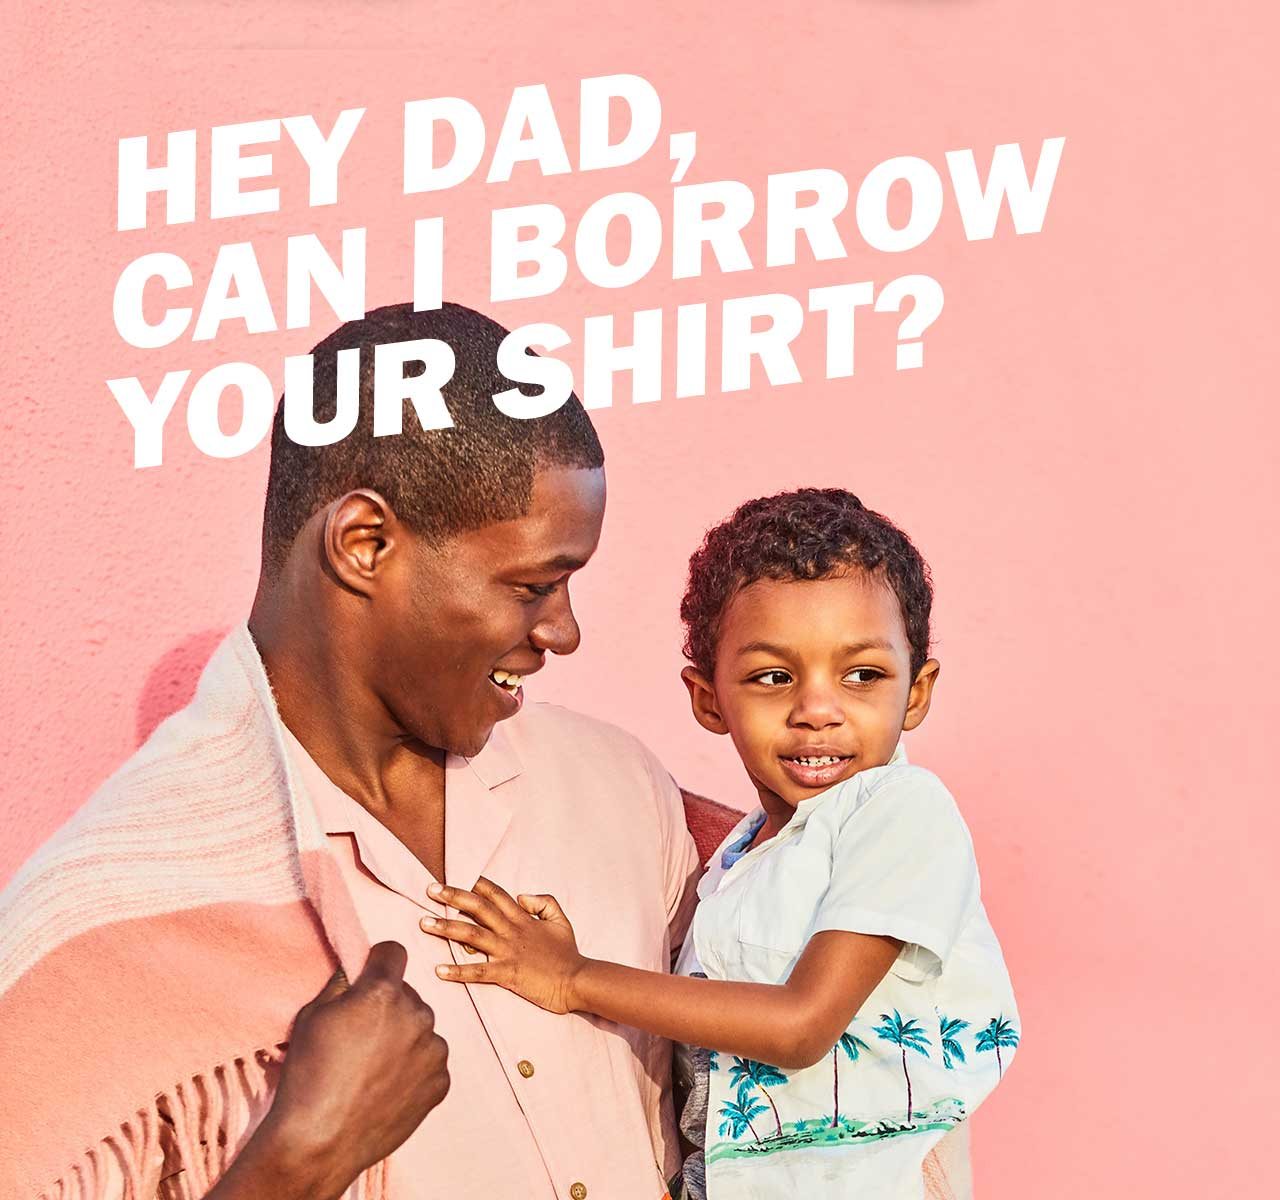 Hey dad, can i borrow your shirt?